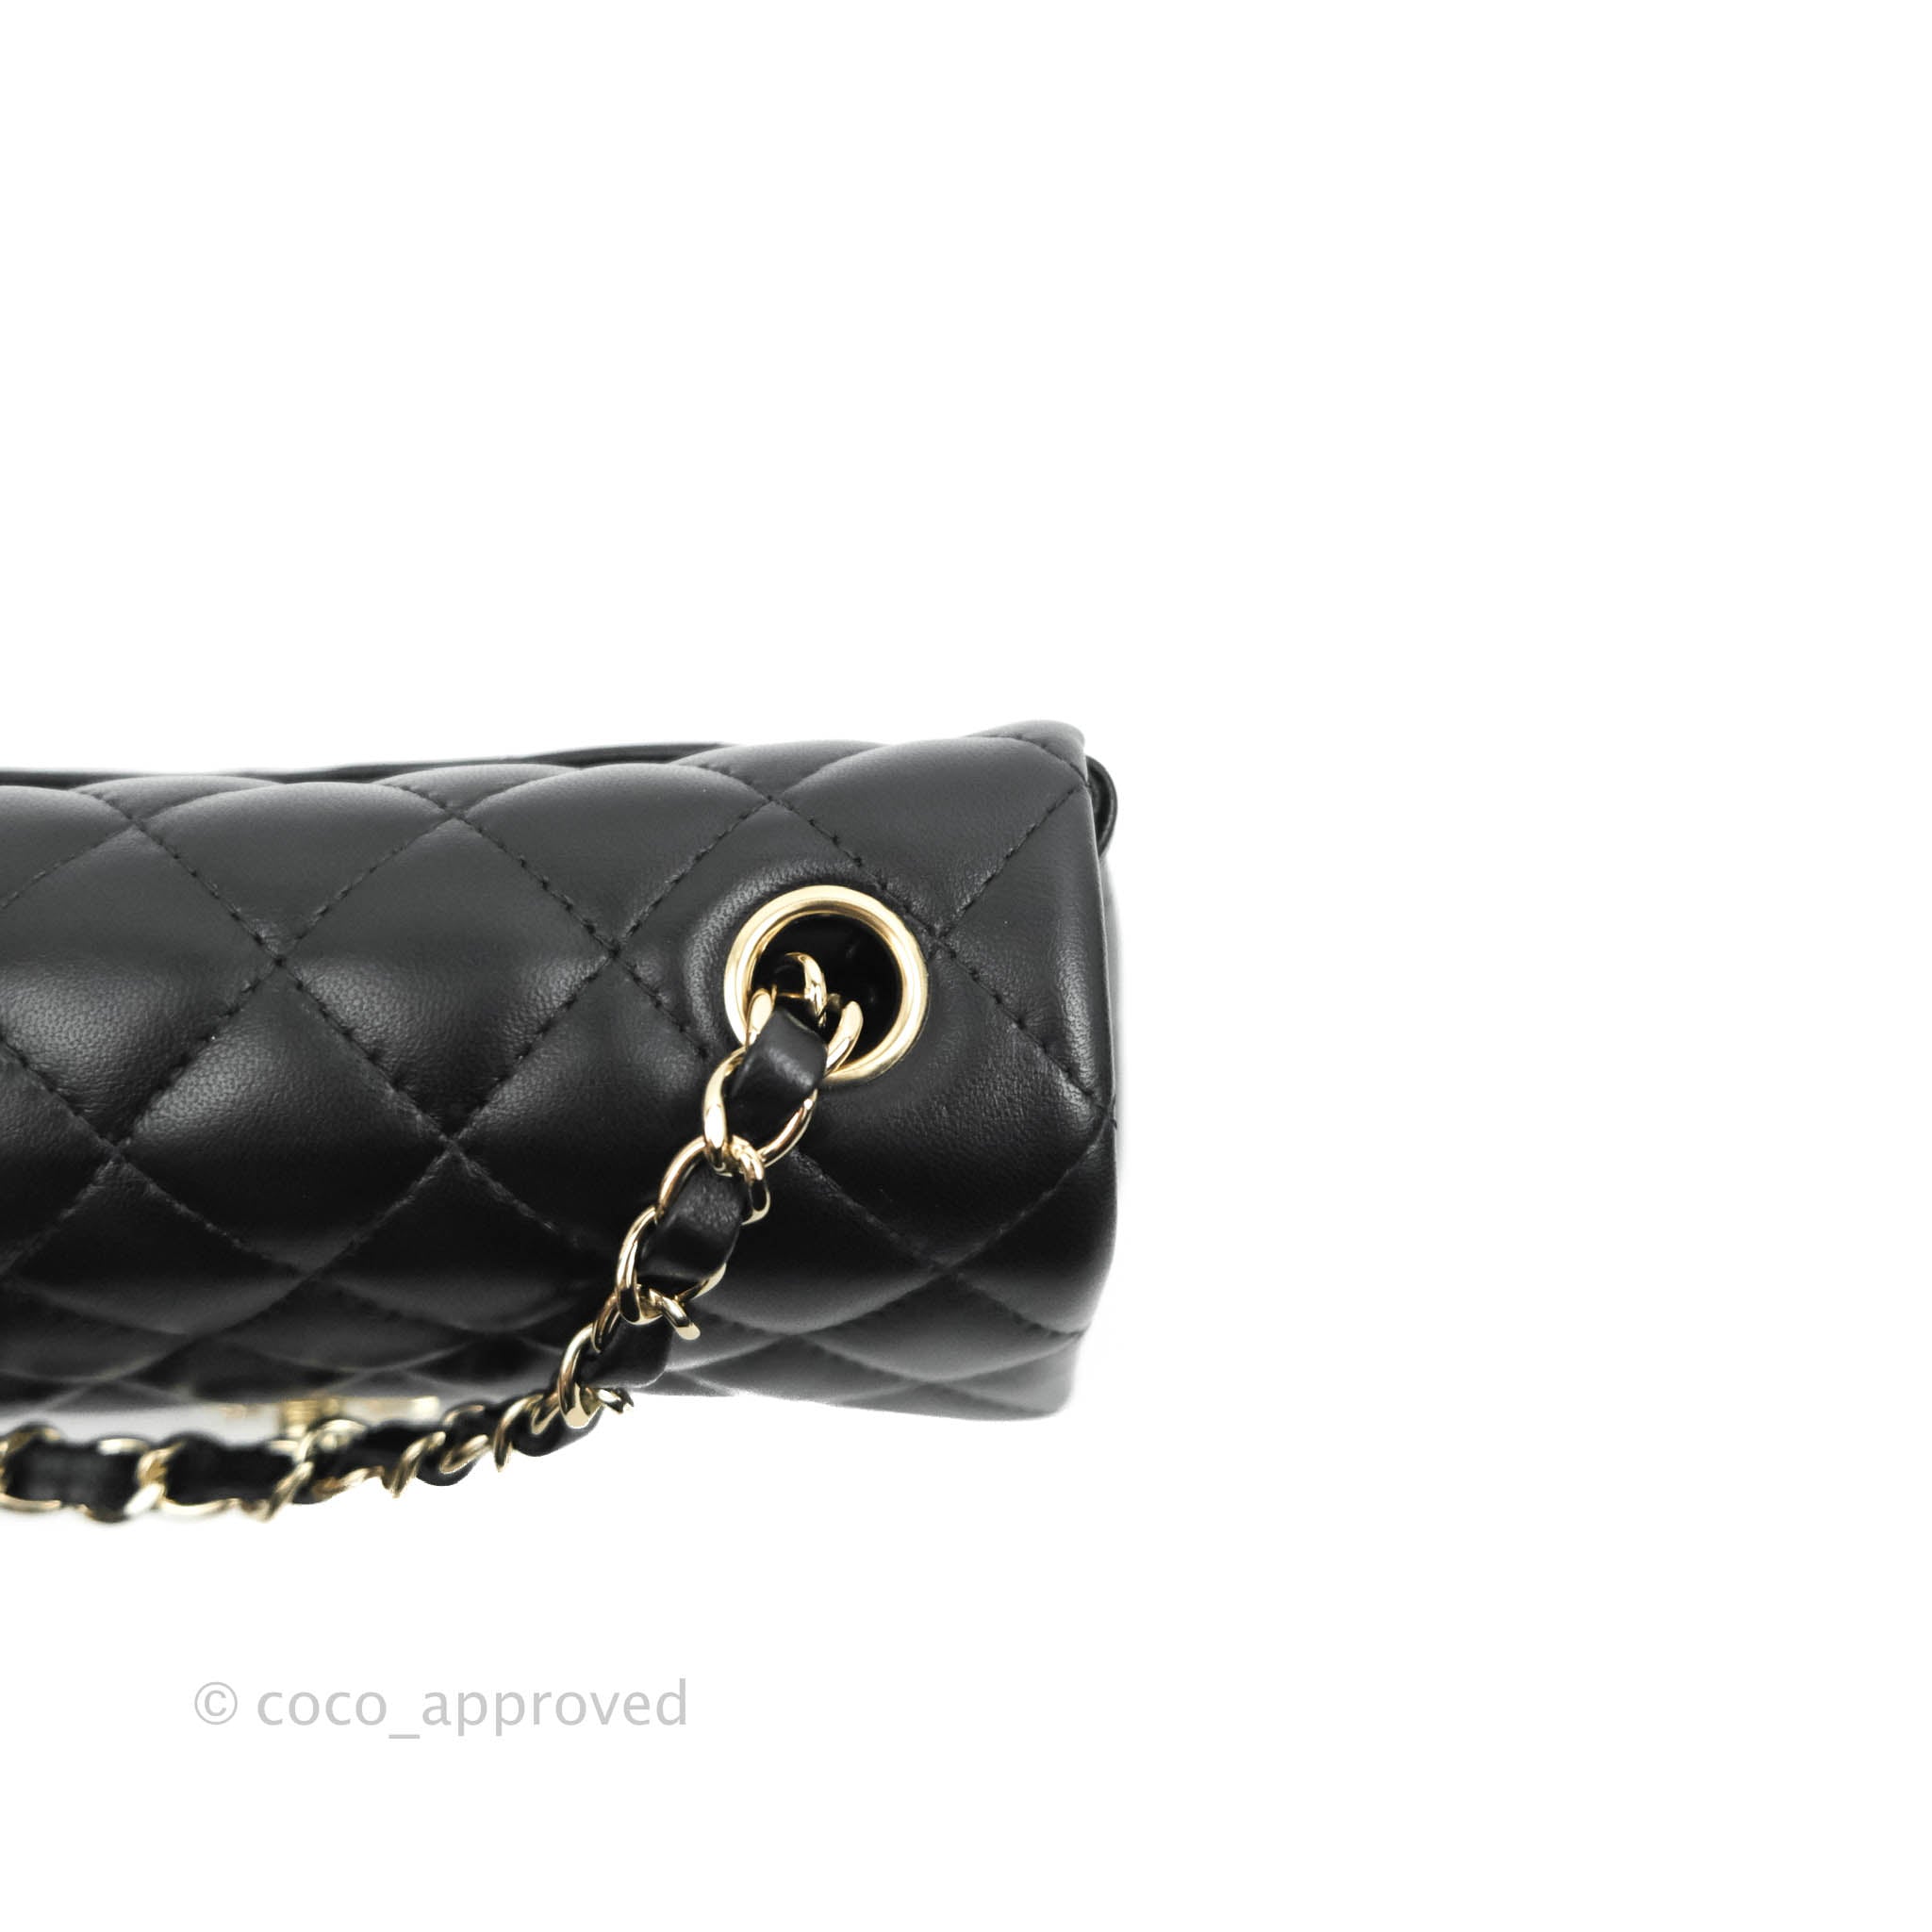 Chanel Mini Rectangular Flap Bag Beige Lambskin Light Gold Hardware